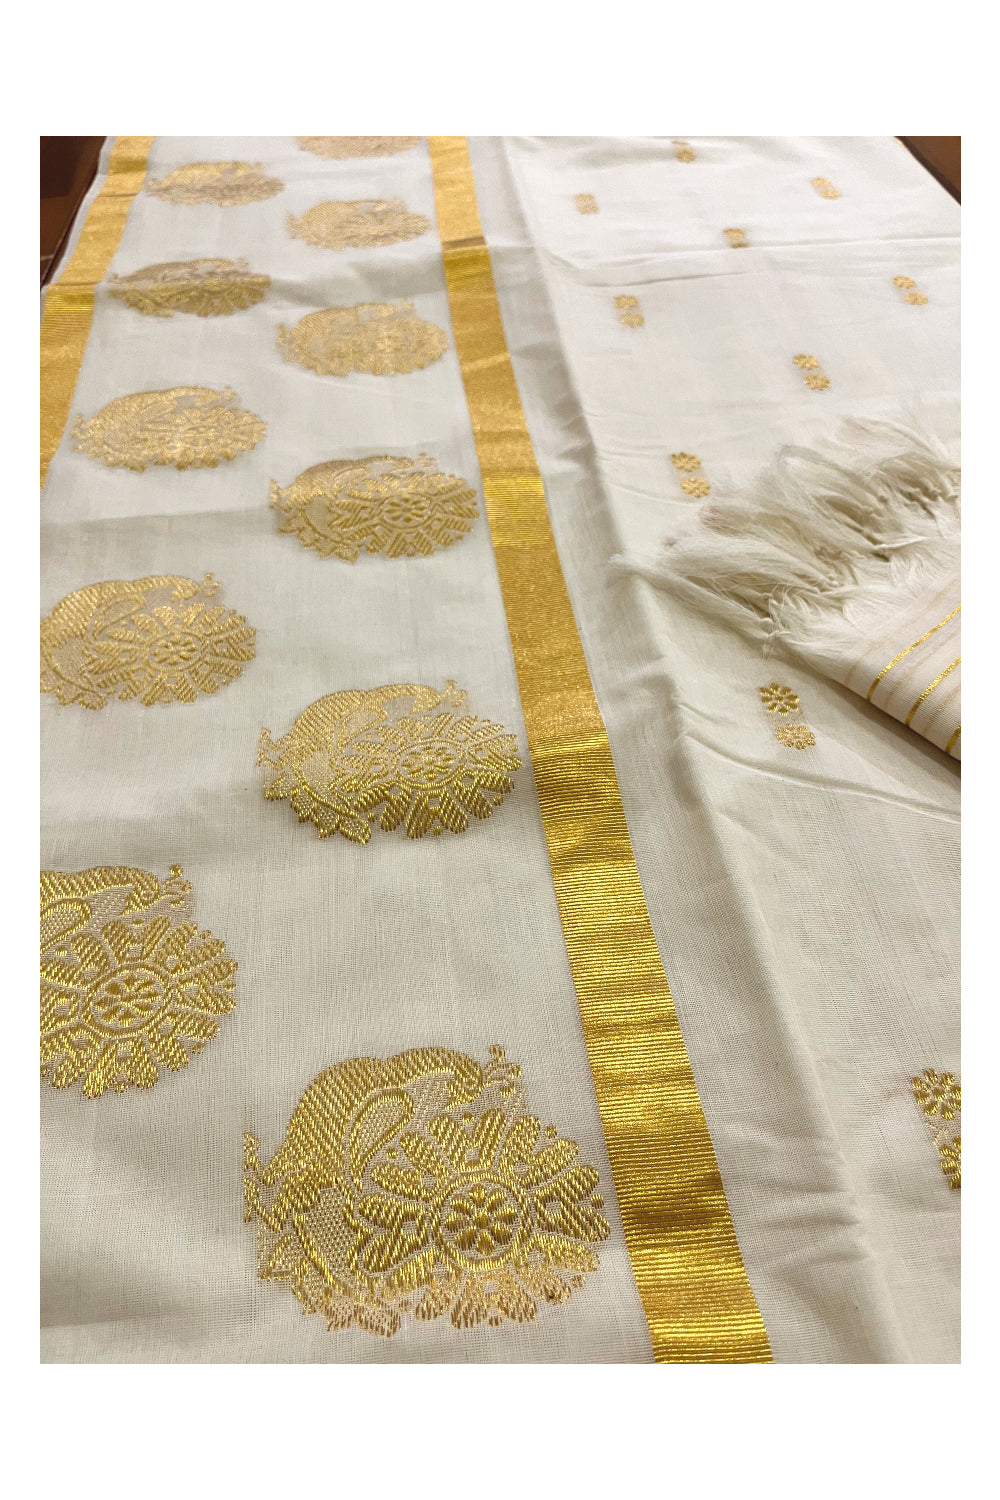 Southloom Premium Handloom Kasavu Churidar Salwar Material with Peacock Woven Designs (include Plain Shawl / Dupatta)